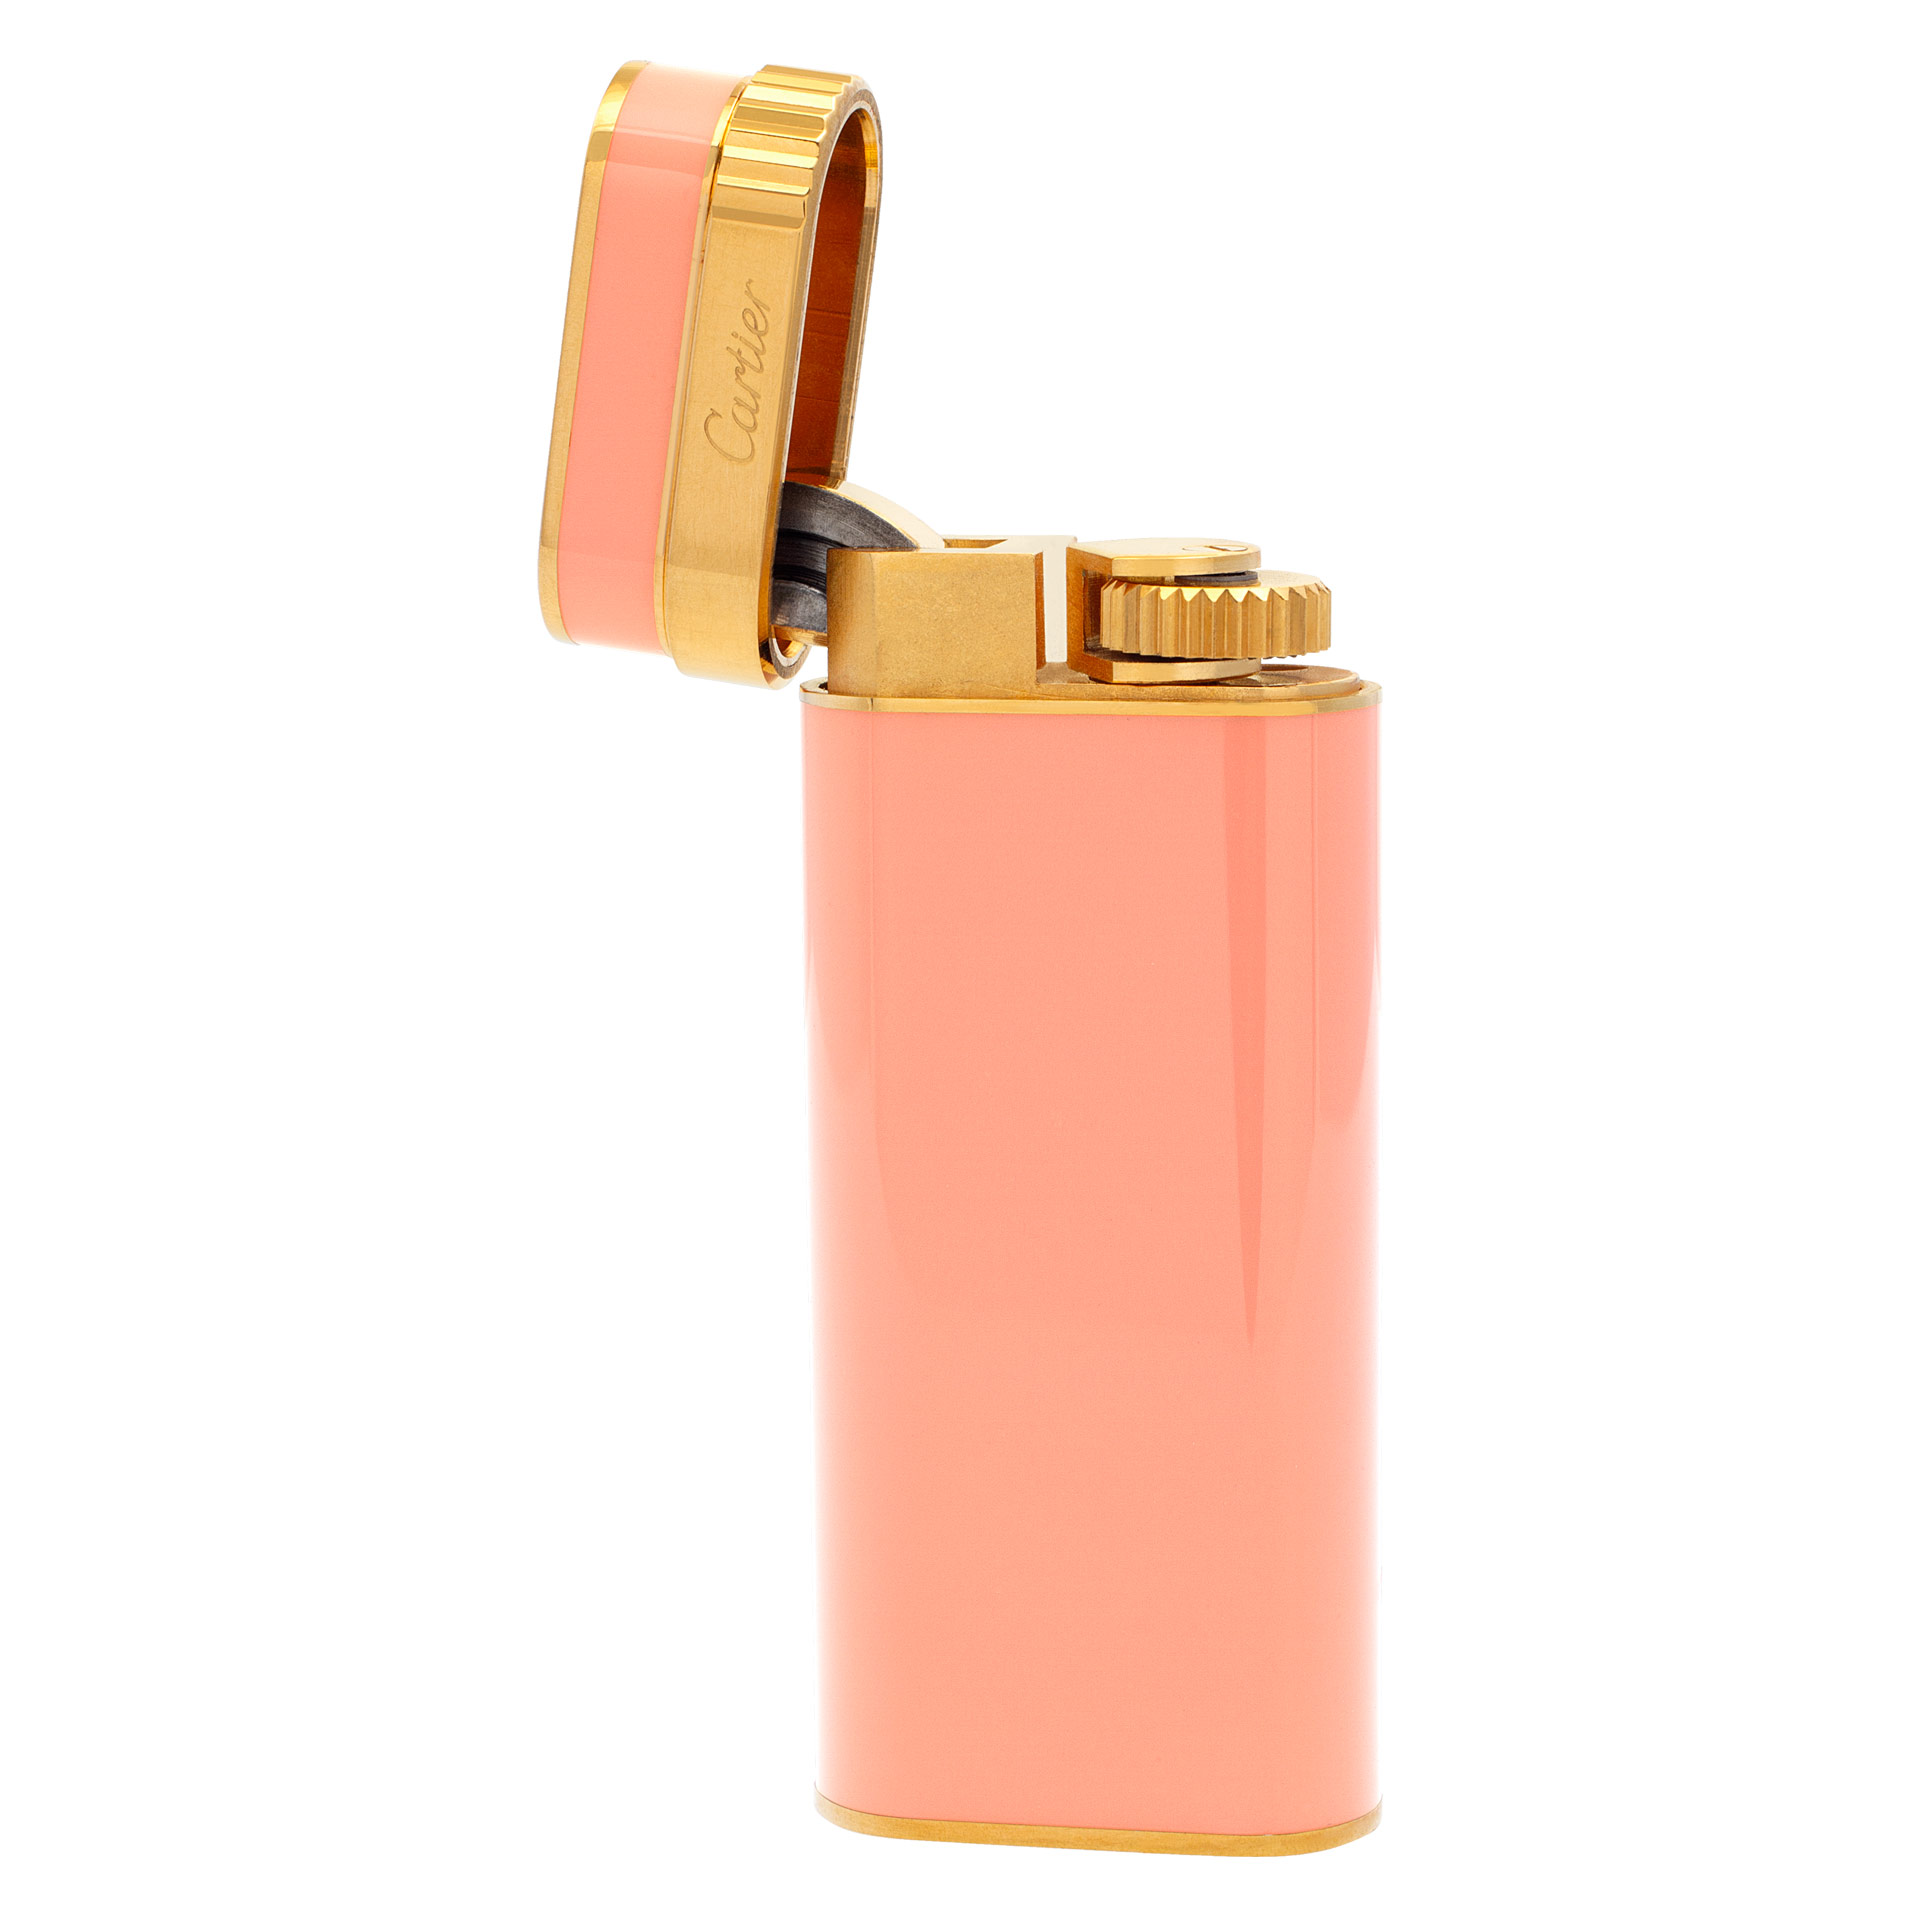 Cartier lighter in baby pink color 